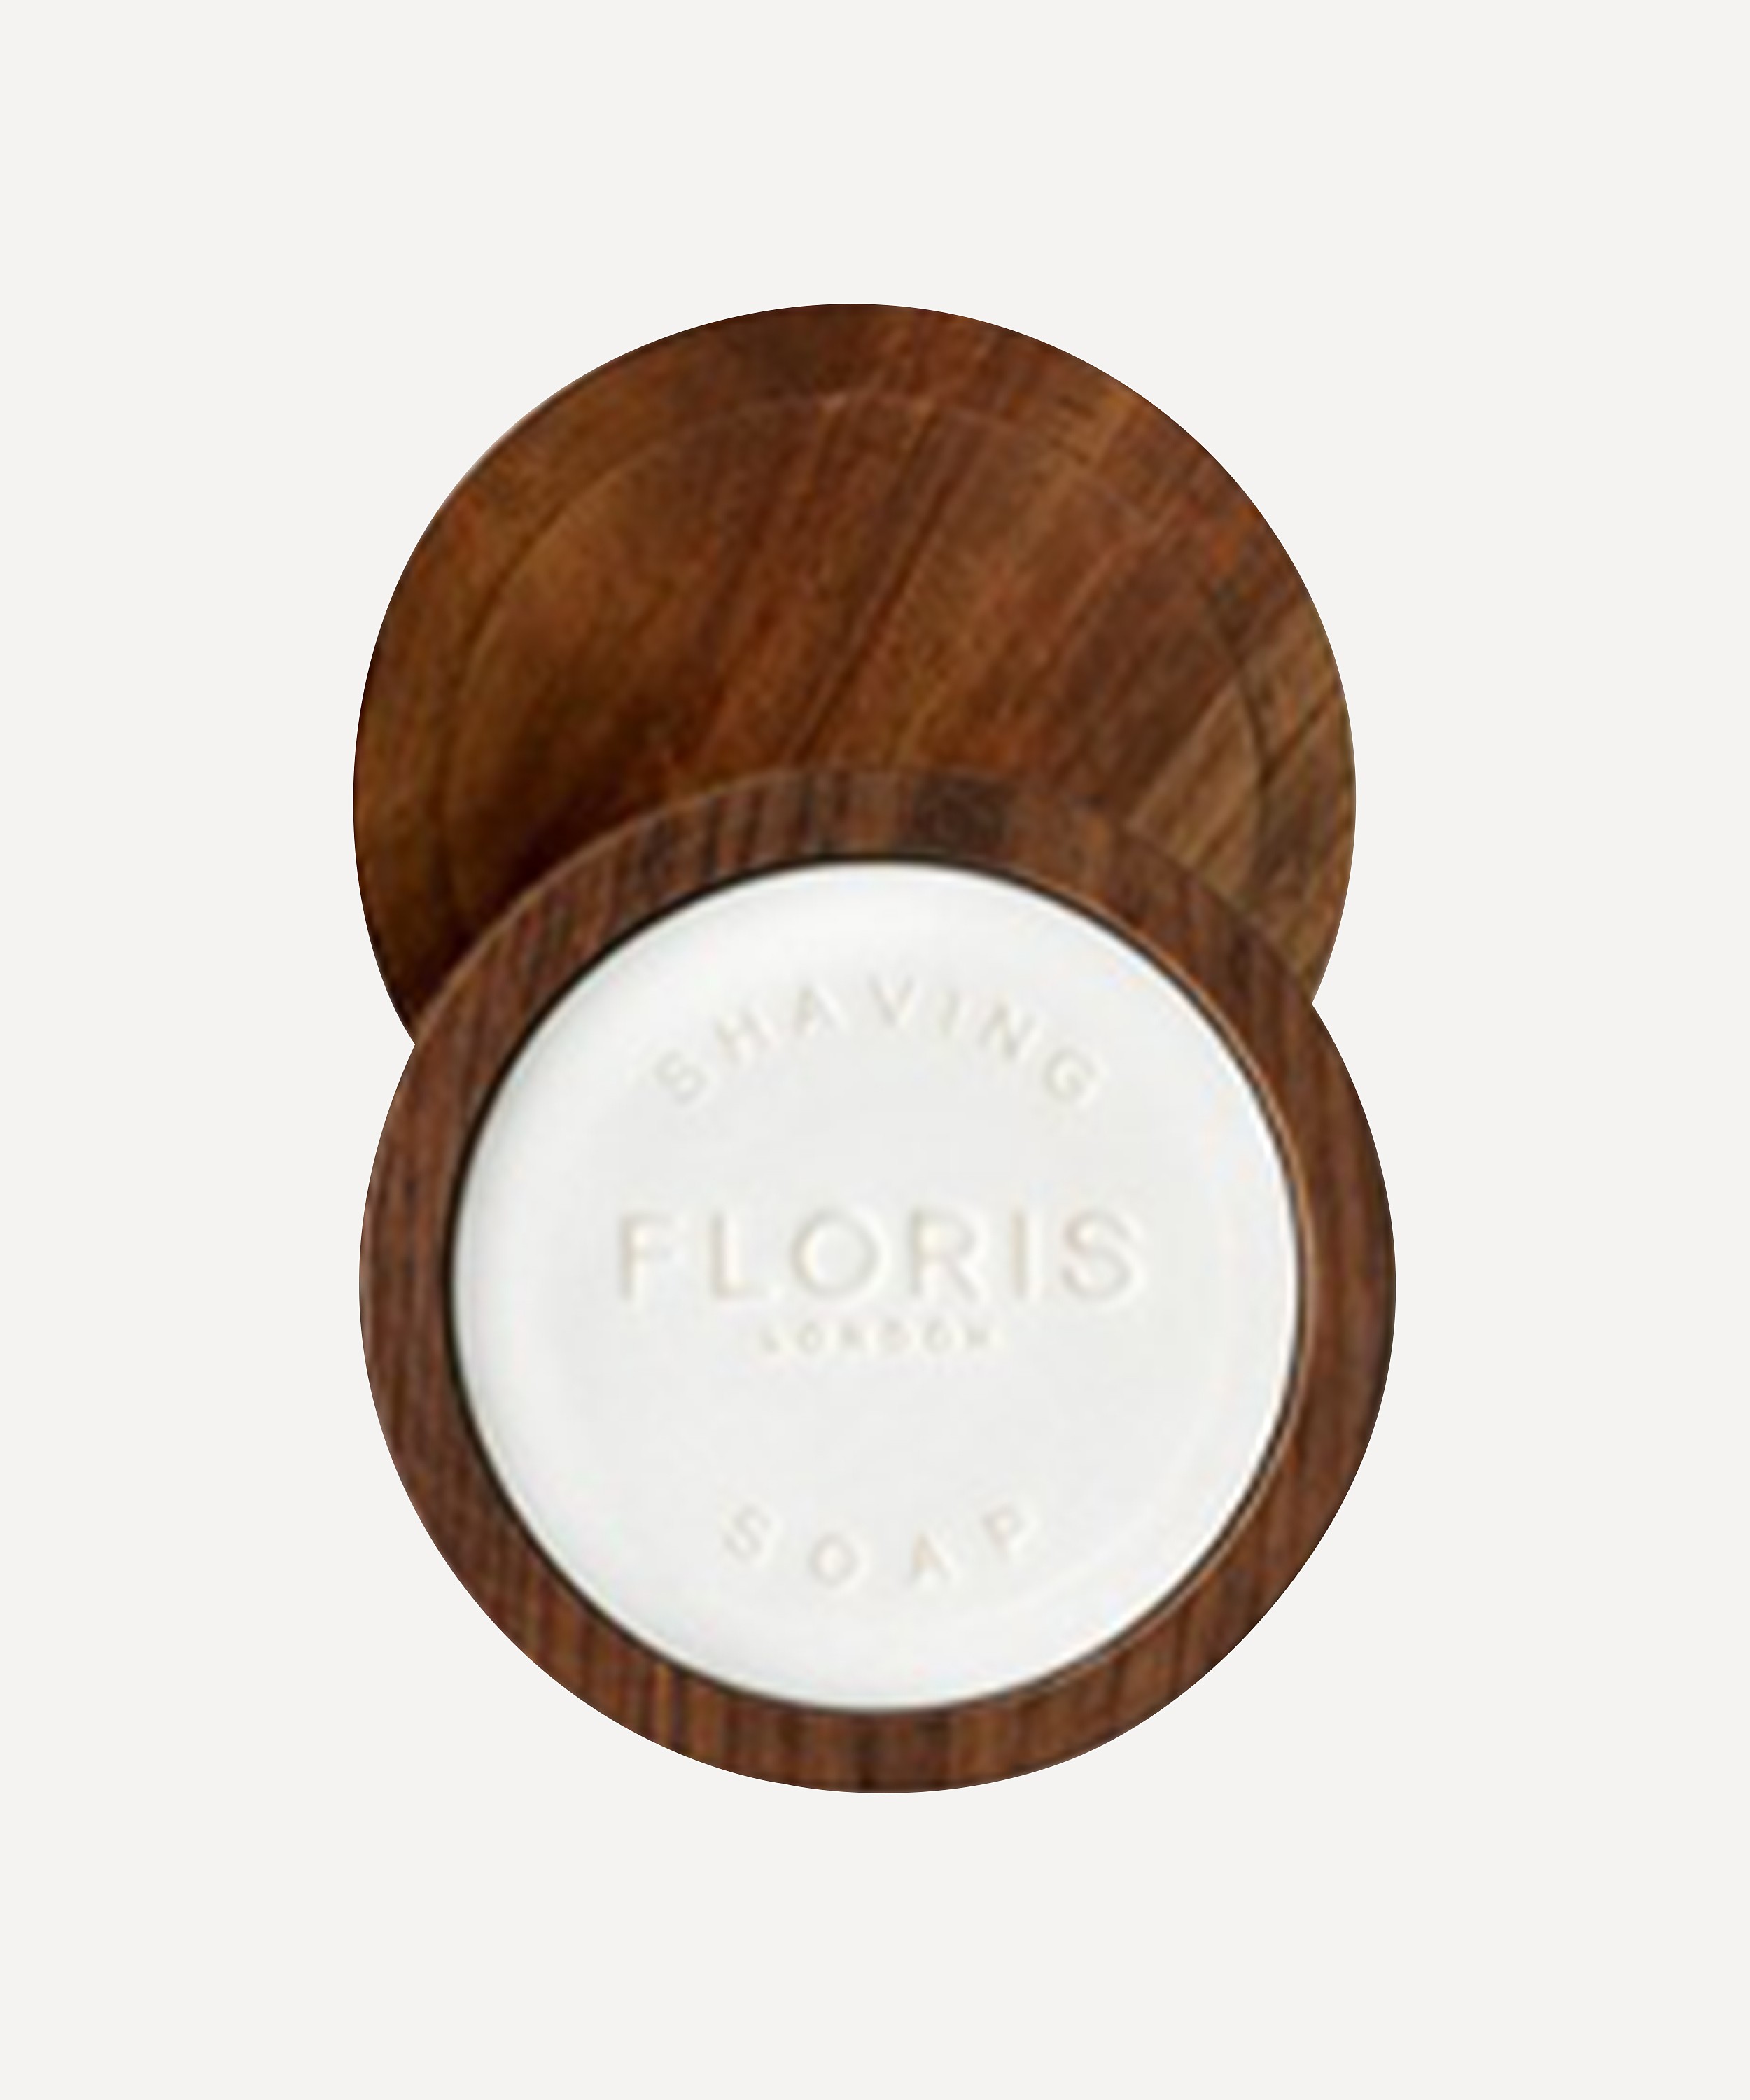 Floris London - The Gentleman Floris Elite Shaving Soap & Bowl 100g image number 1